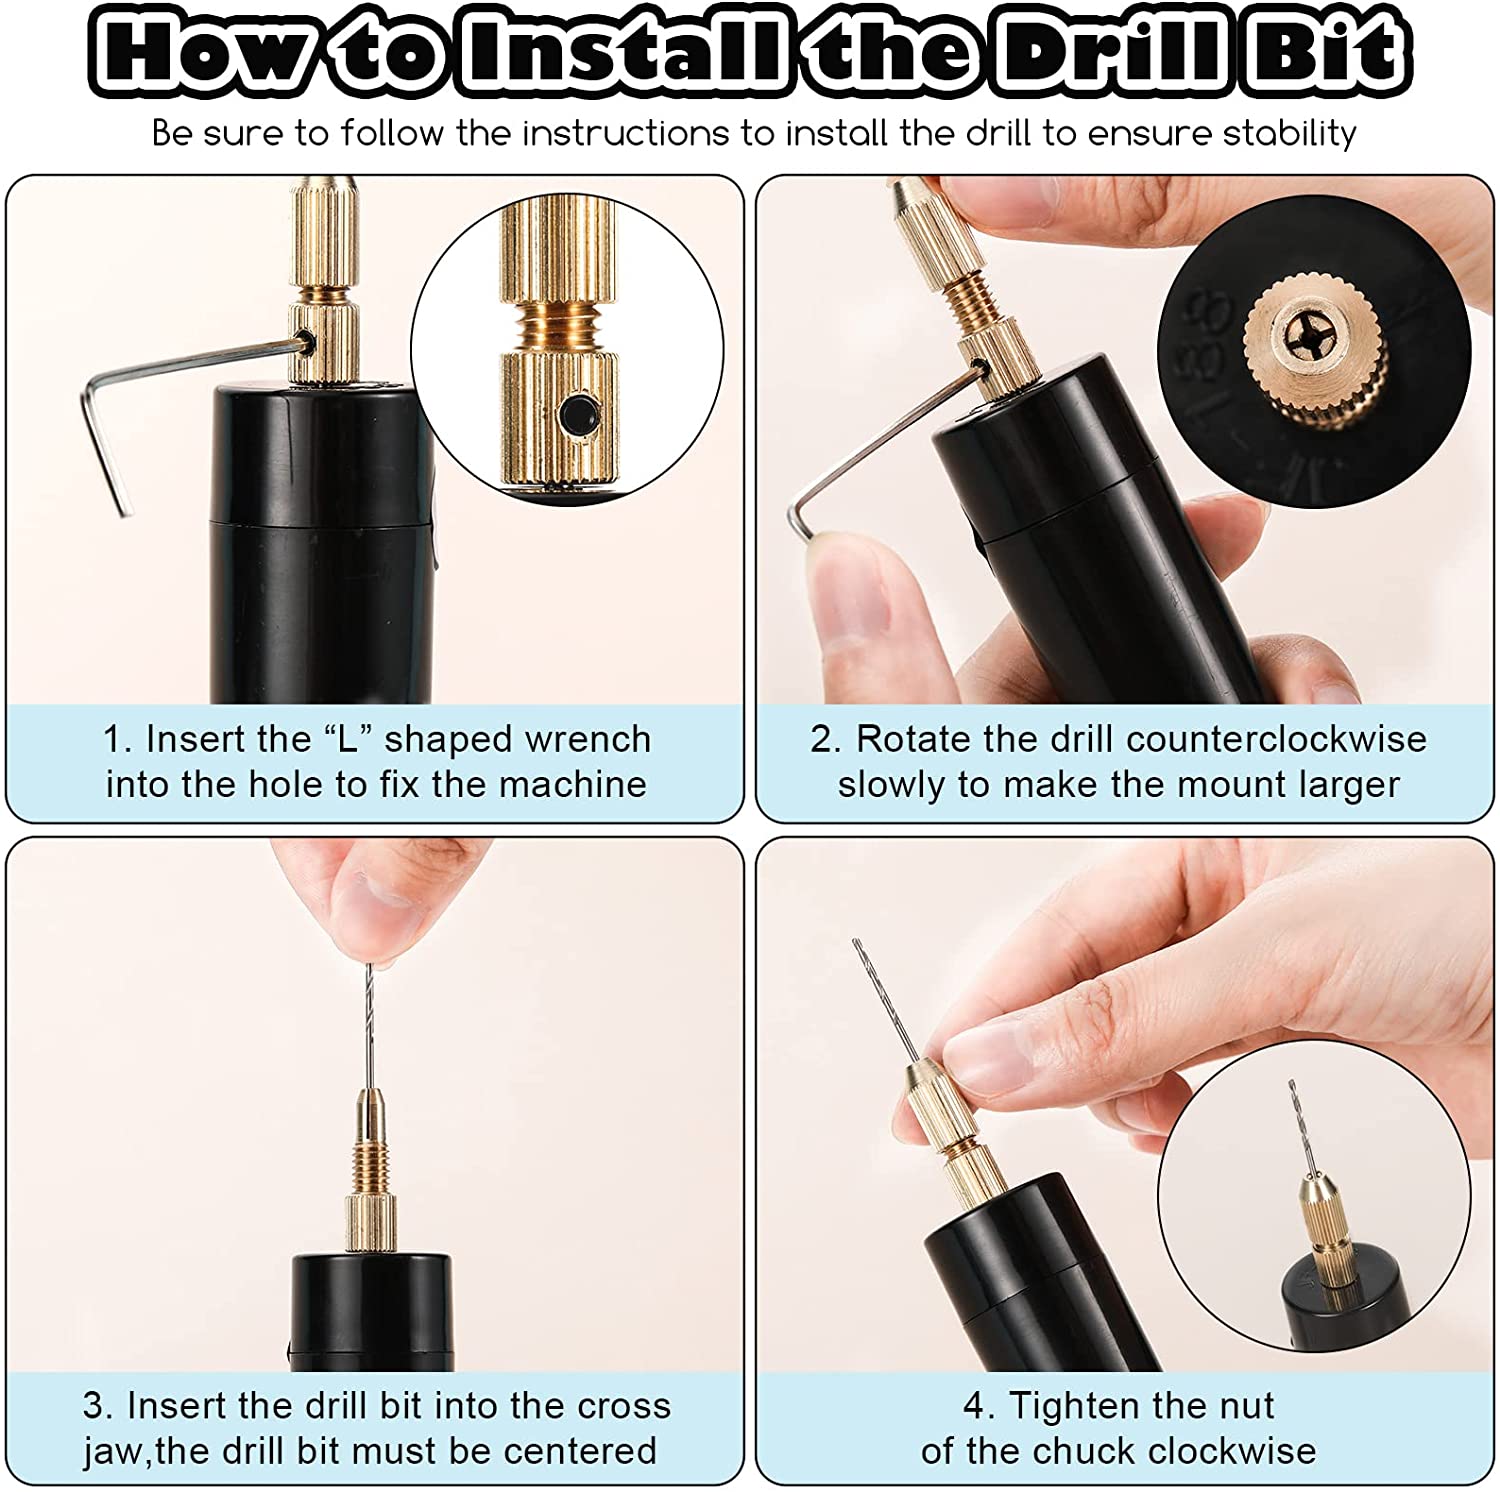 Metal Hand Drill Equipment Resin Epoxy Mold Tools Drill Screw Jewelry Making  1se